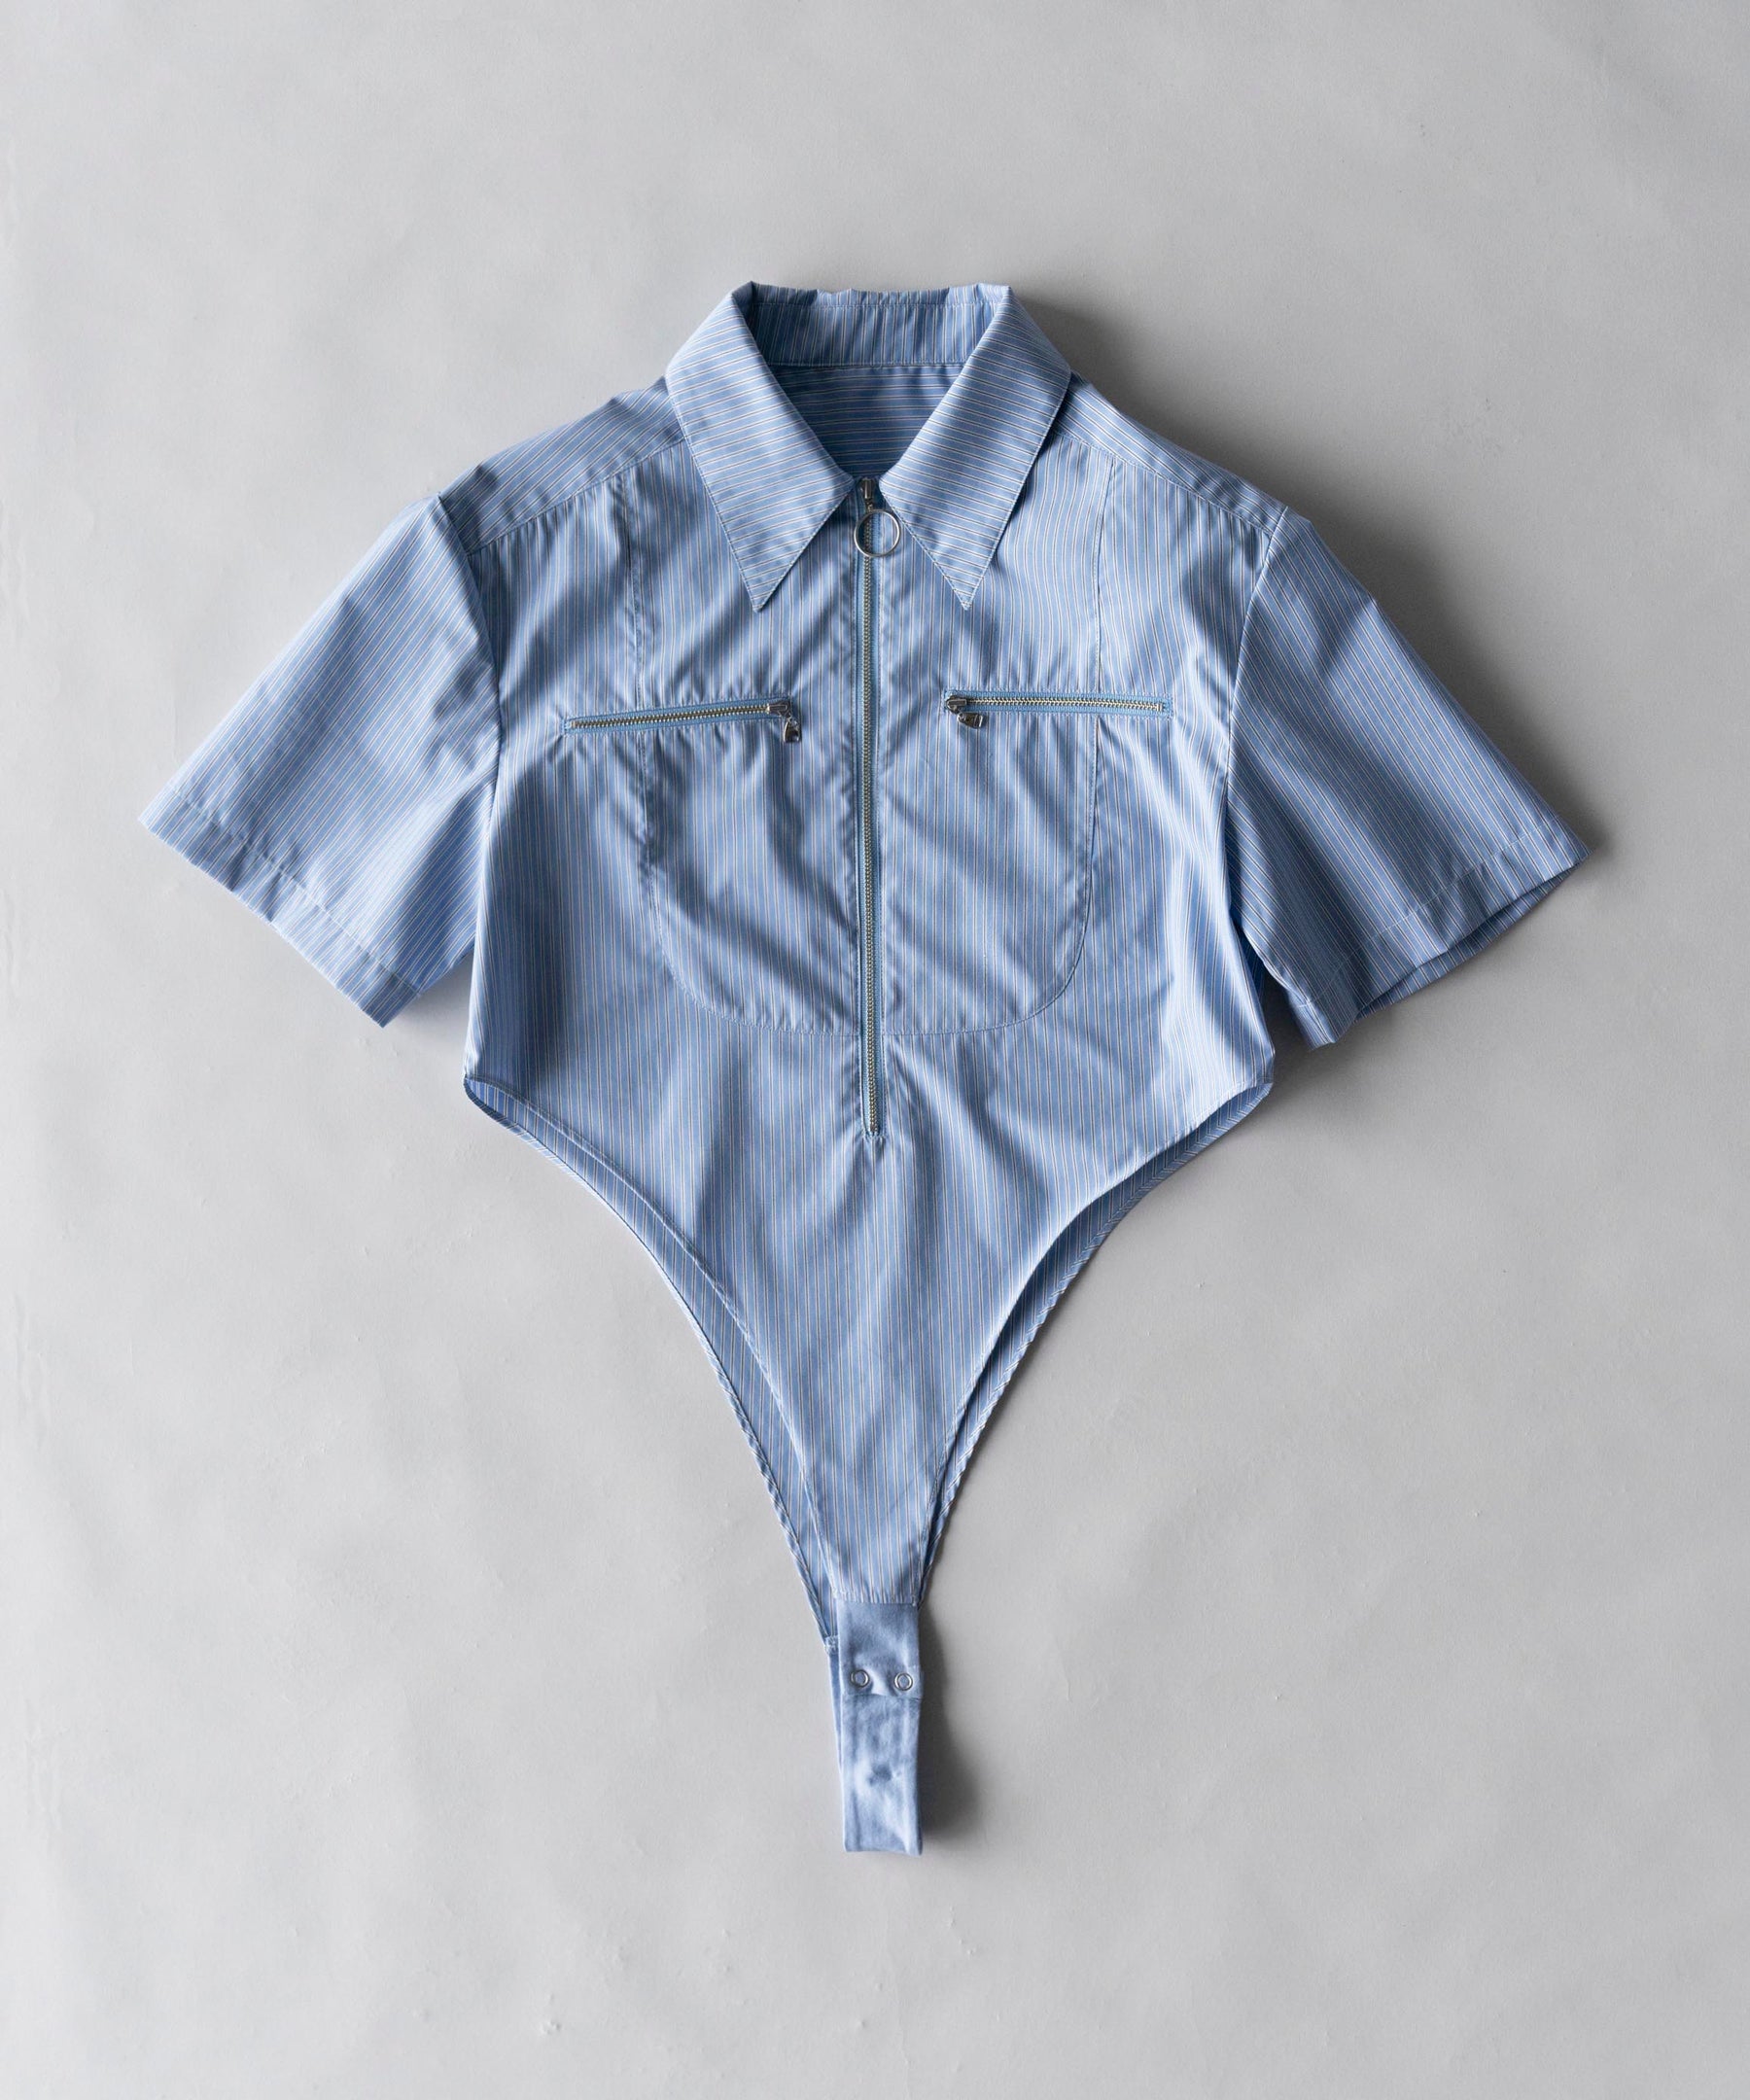 [Sale] Fastener Shirt Body Suit